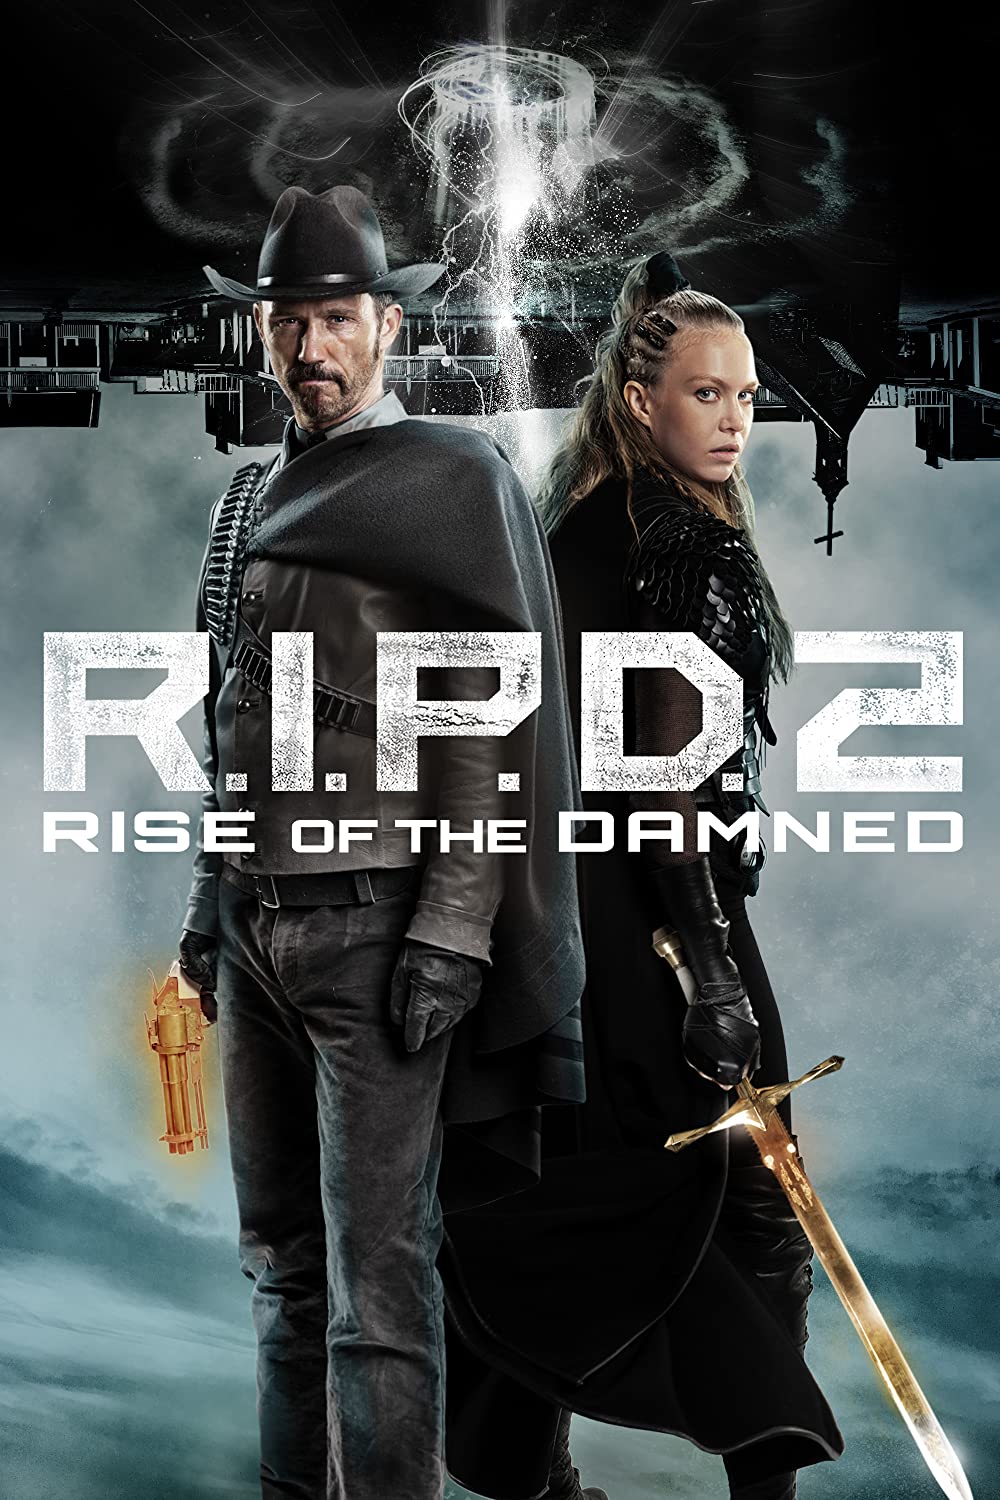 Stiahni si Filmy s titulkama  R.I.P.D. 2: Rise of the Damned (2022)[1080p] = CSFD 27%